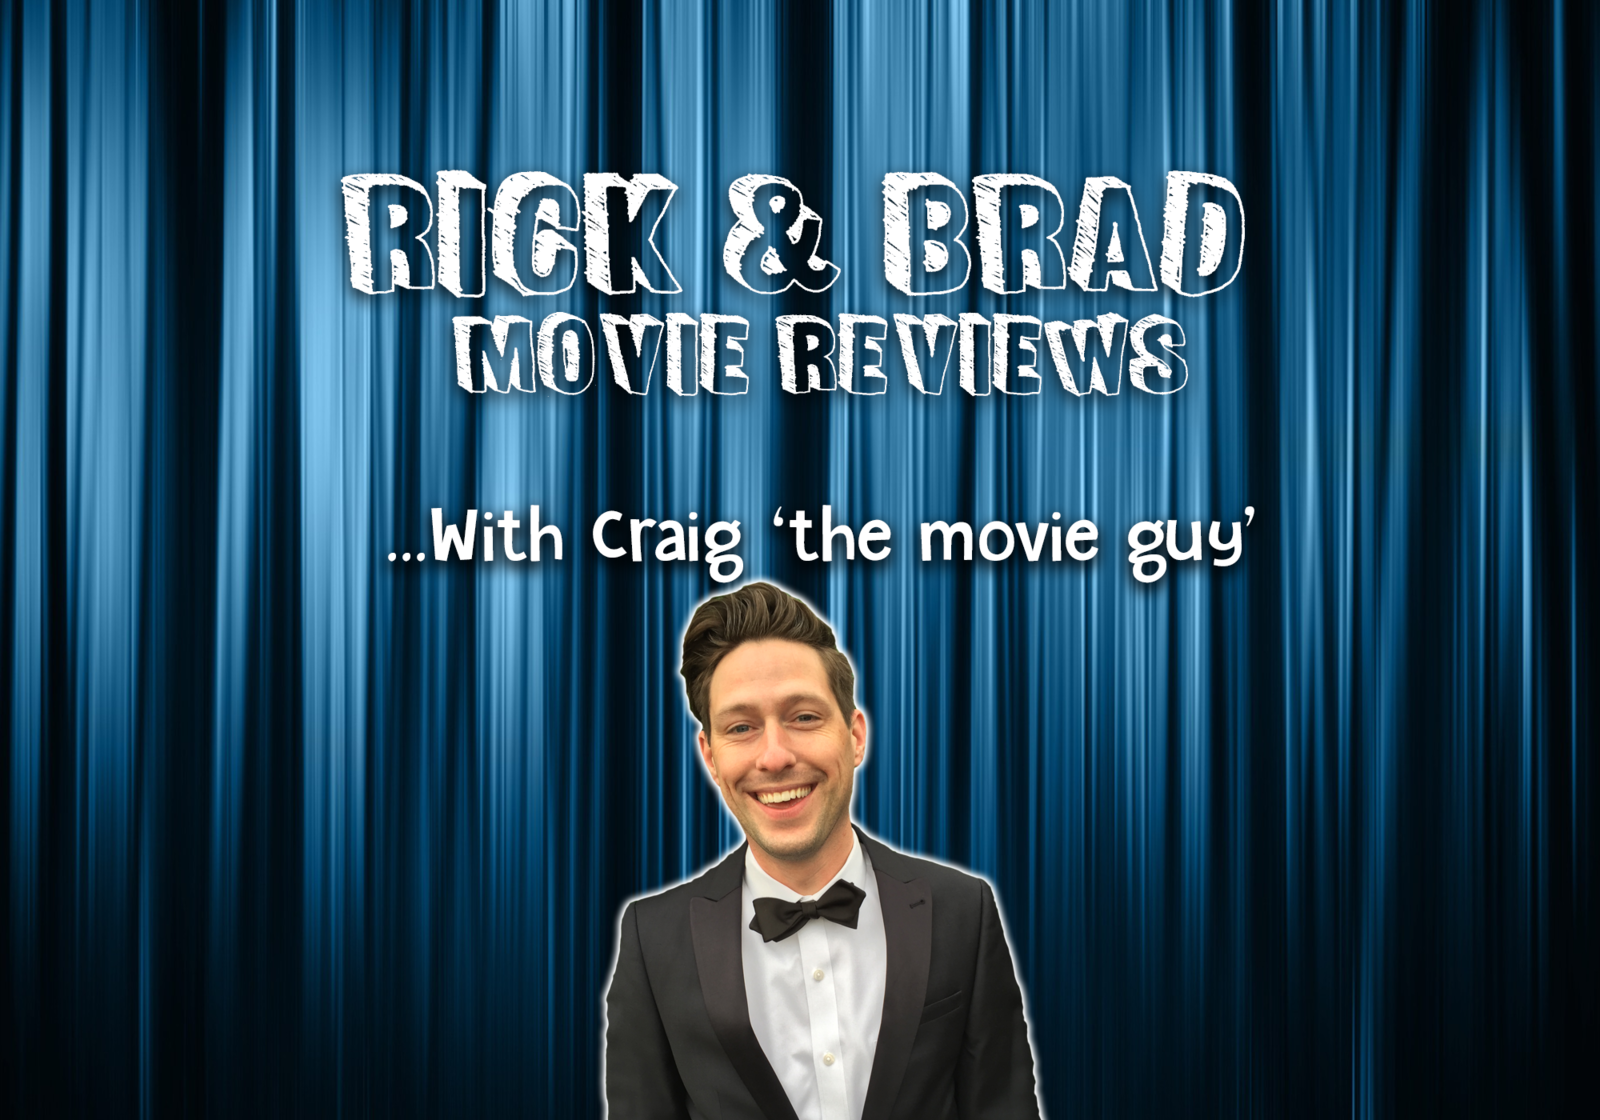 07-09 Movie Reviews with Craig 'The Movie Guy'